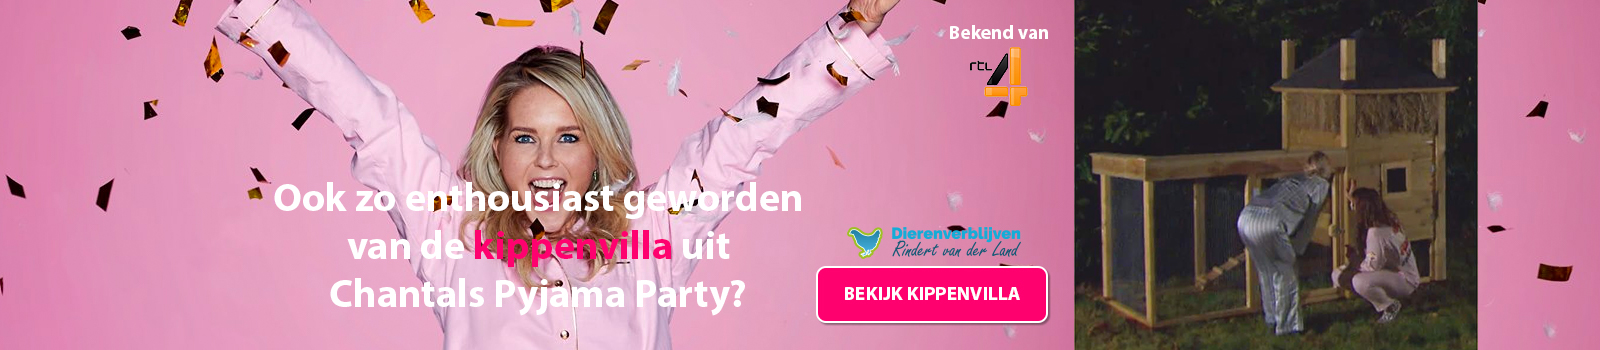 Chantals Pyjama Party RTL4 kippenvilla dierenverblijven-vanderland